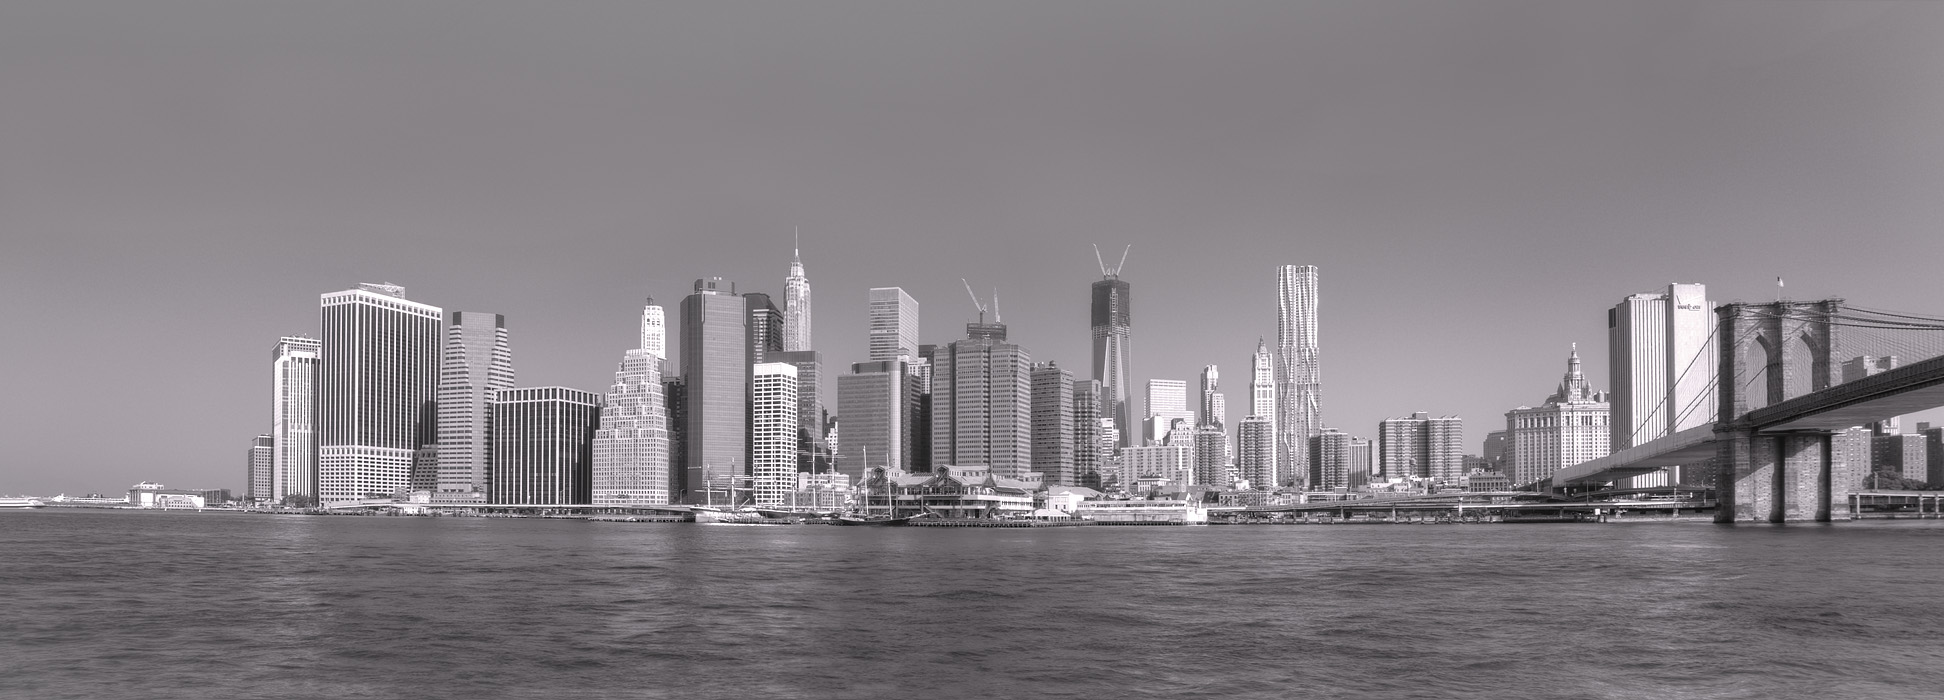 фото "View on lower Manhattan from Brooklyn" метки: архитектура, пейзаж, черно-белые, Нью-Йорк, городской пейзаж, мост, река